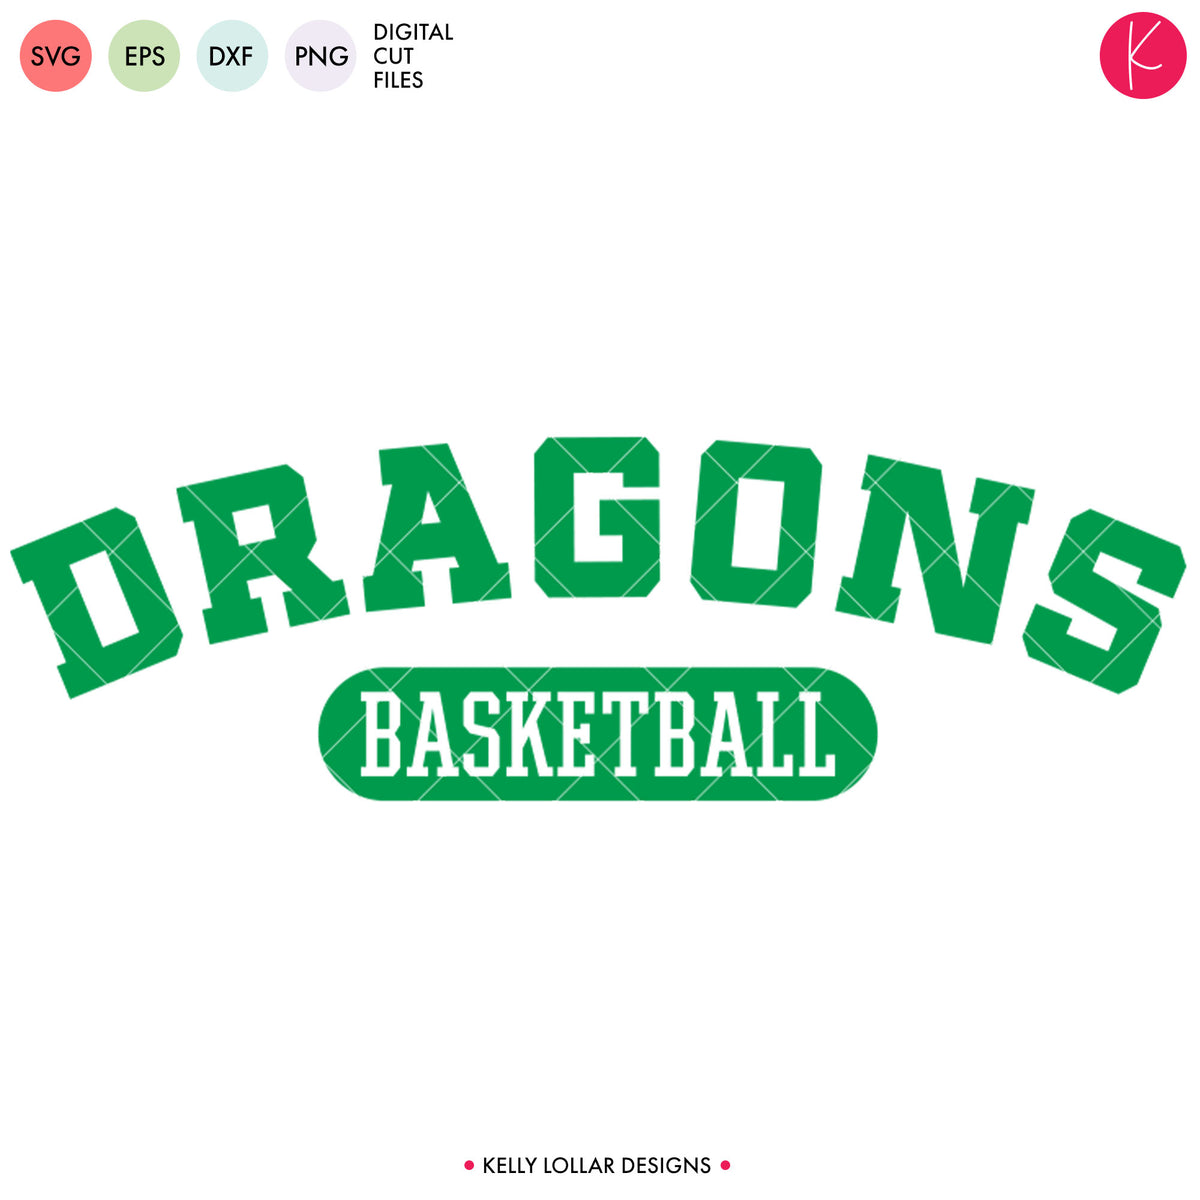 Dragons Basketball Bundle | SVG DXF EPS PNG Cut Files